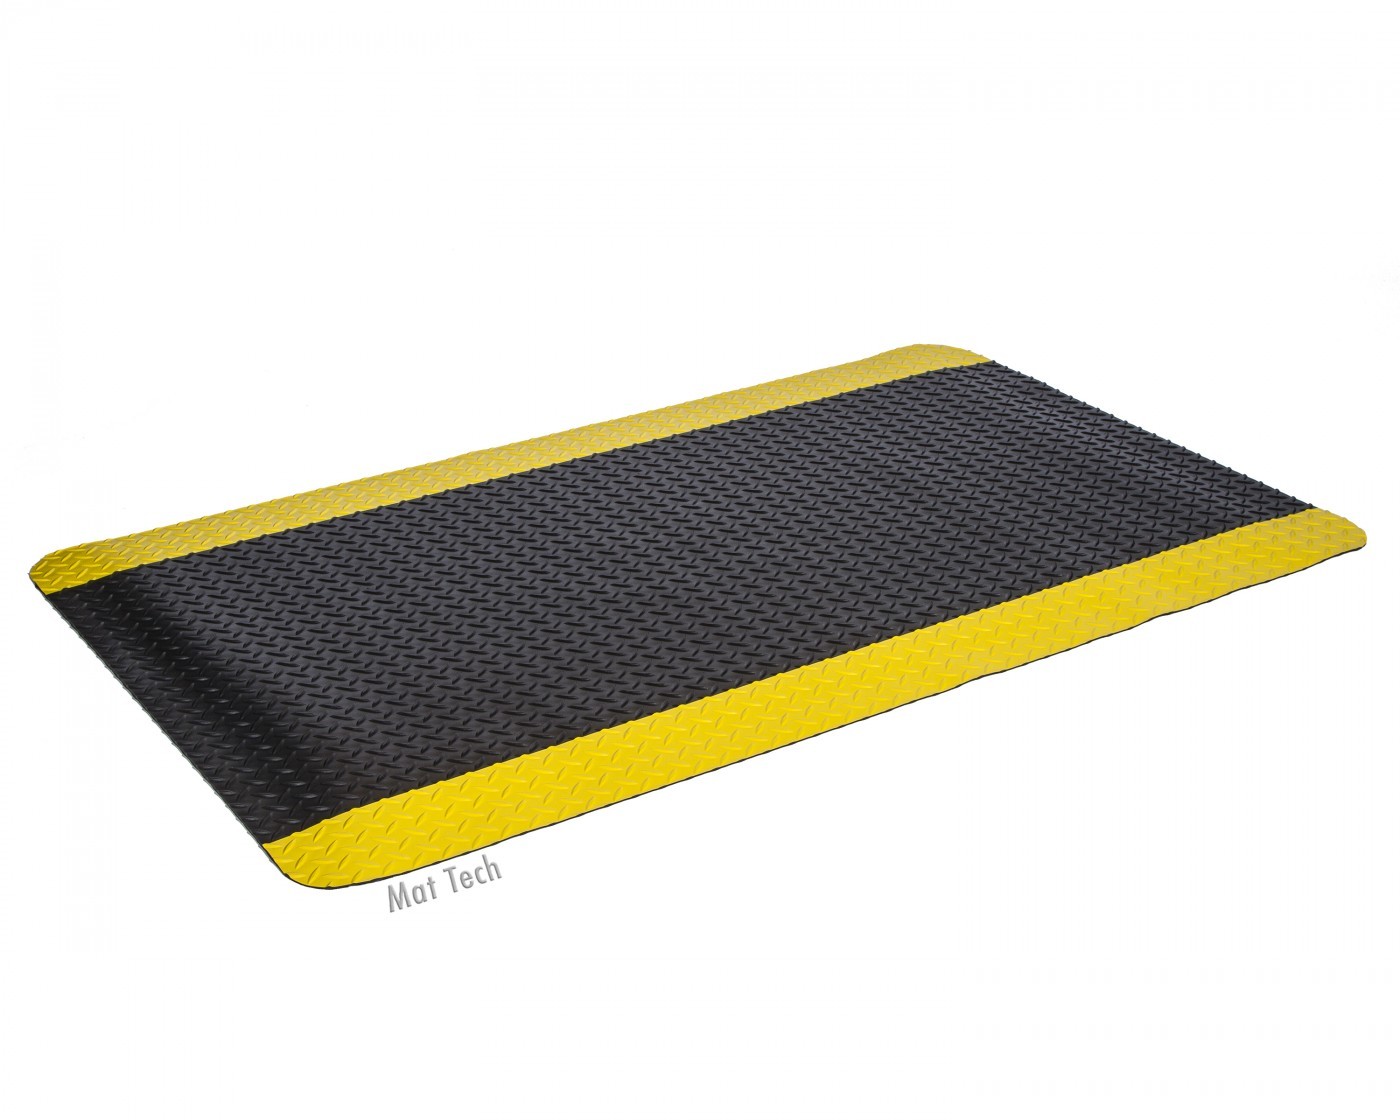 https://www.synetikdesign.com/wp-content/uploads/2015/09/industrial-deck-plate-blackyellowborders-flat.jpg